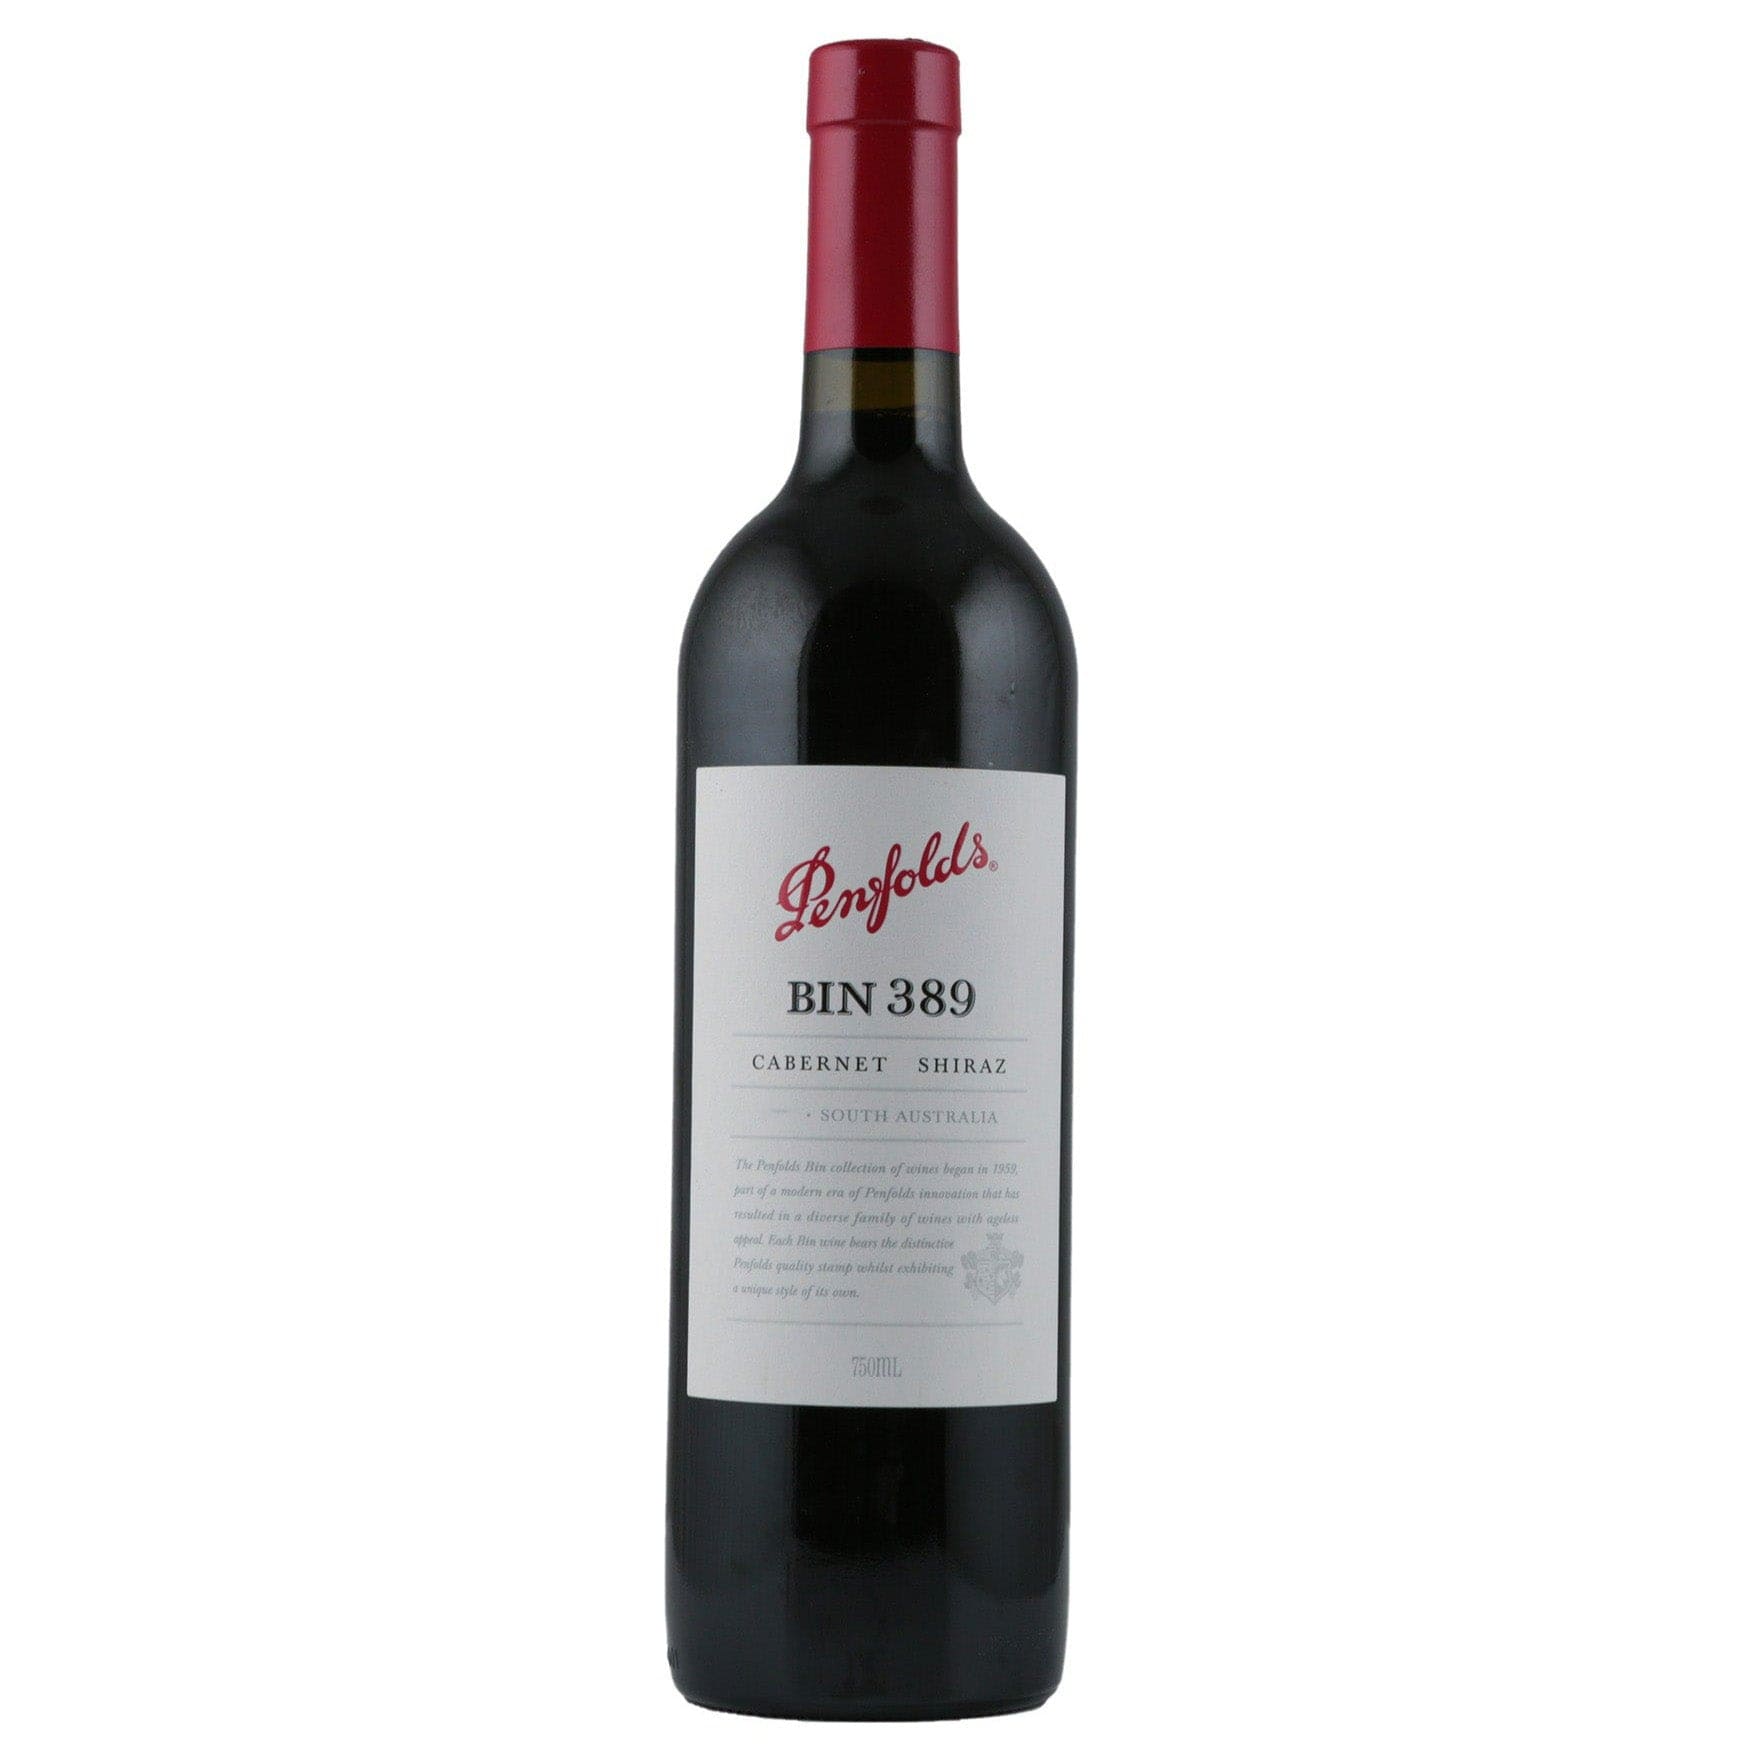 Single bottle of Red wine Penfolds, Bin 389 Cabernet Shiraz, South Australia, 2004 53% Cabernet Sauvignon & 47% Shiraz